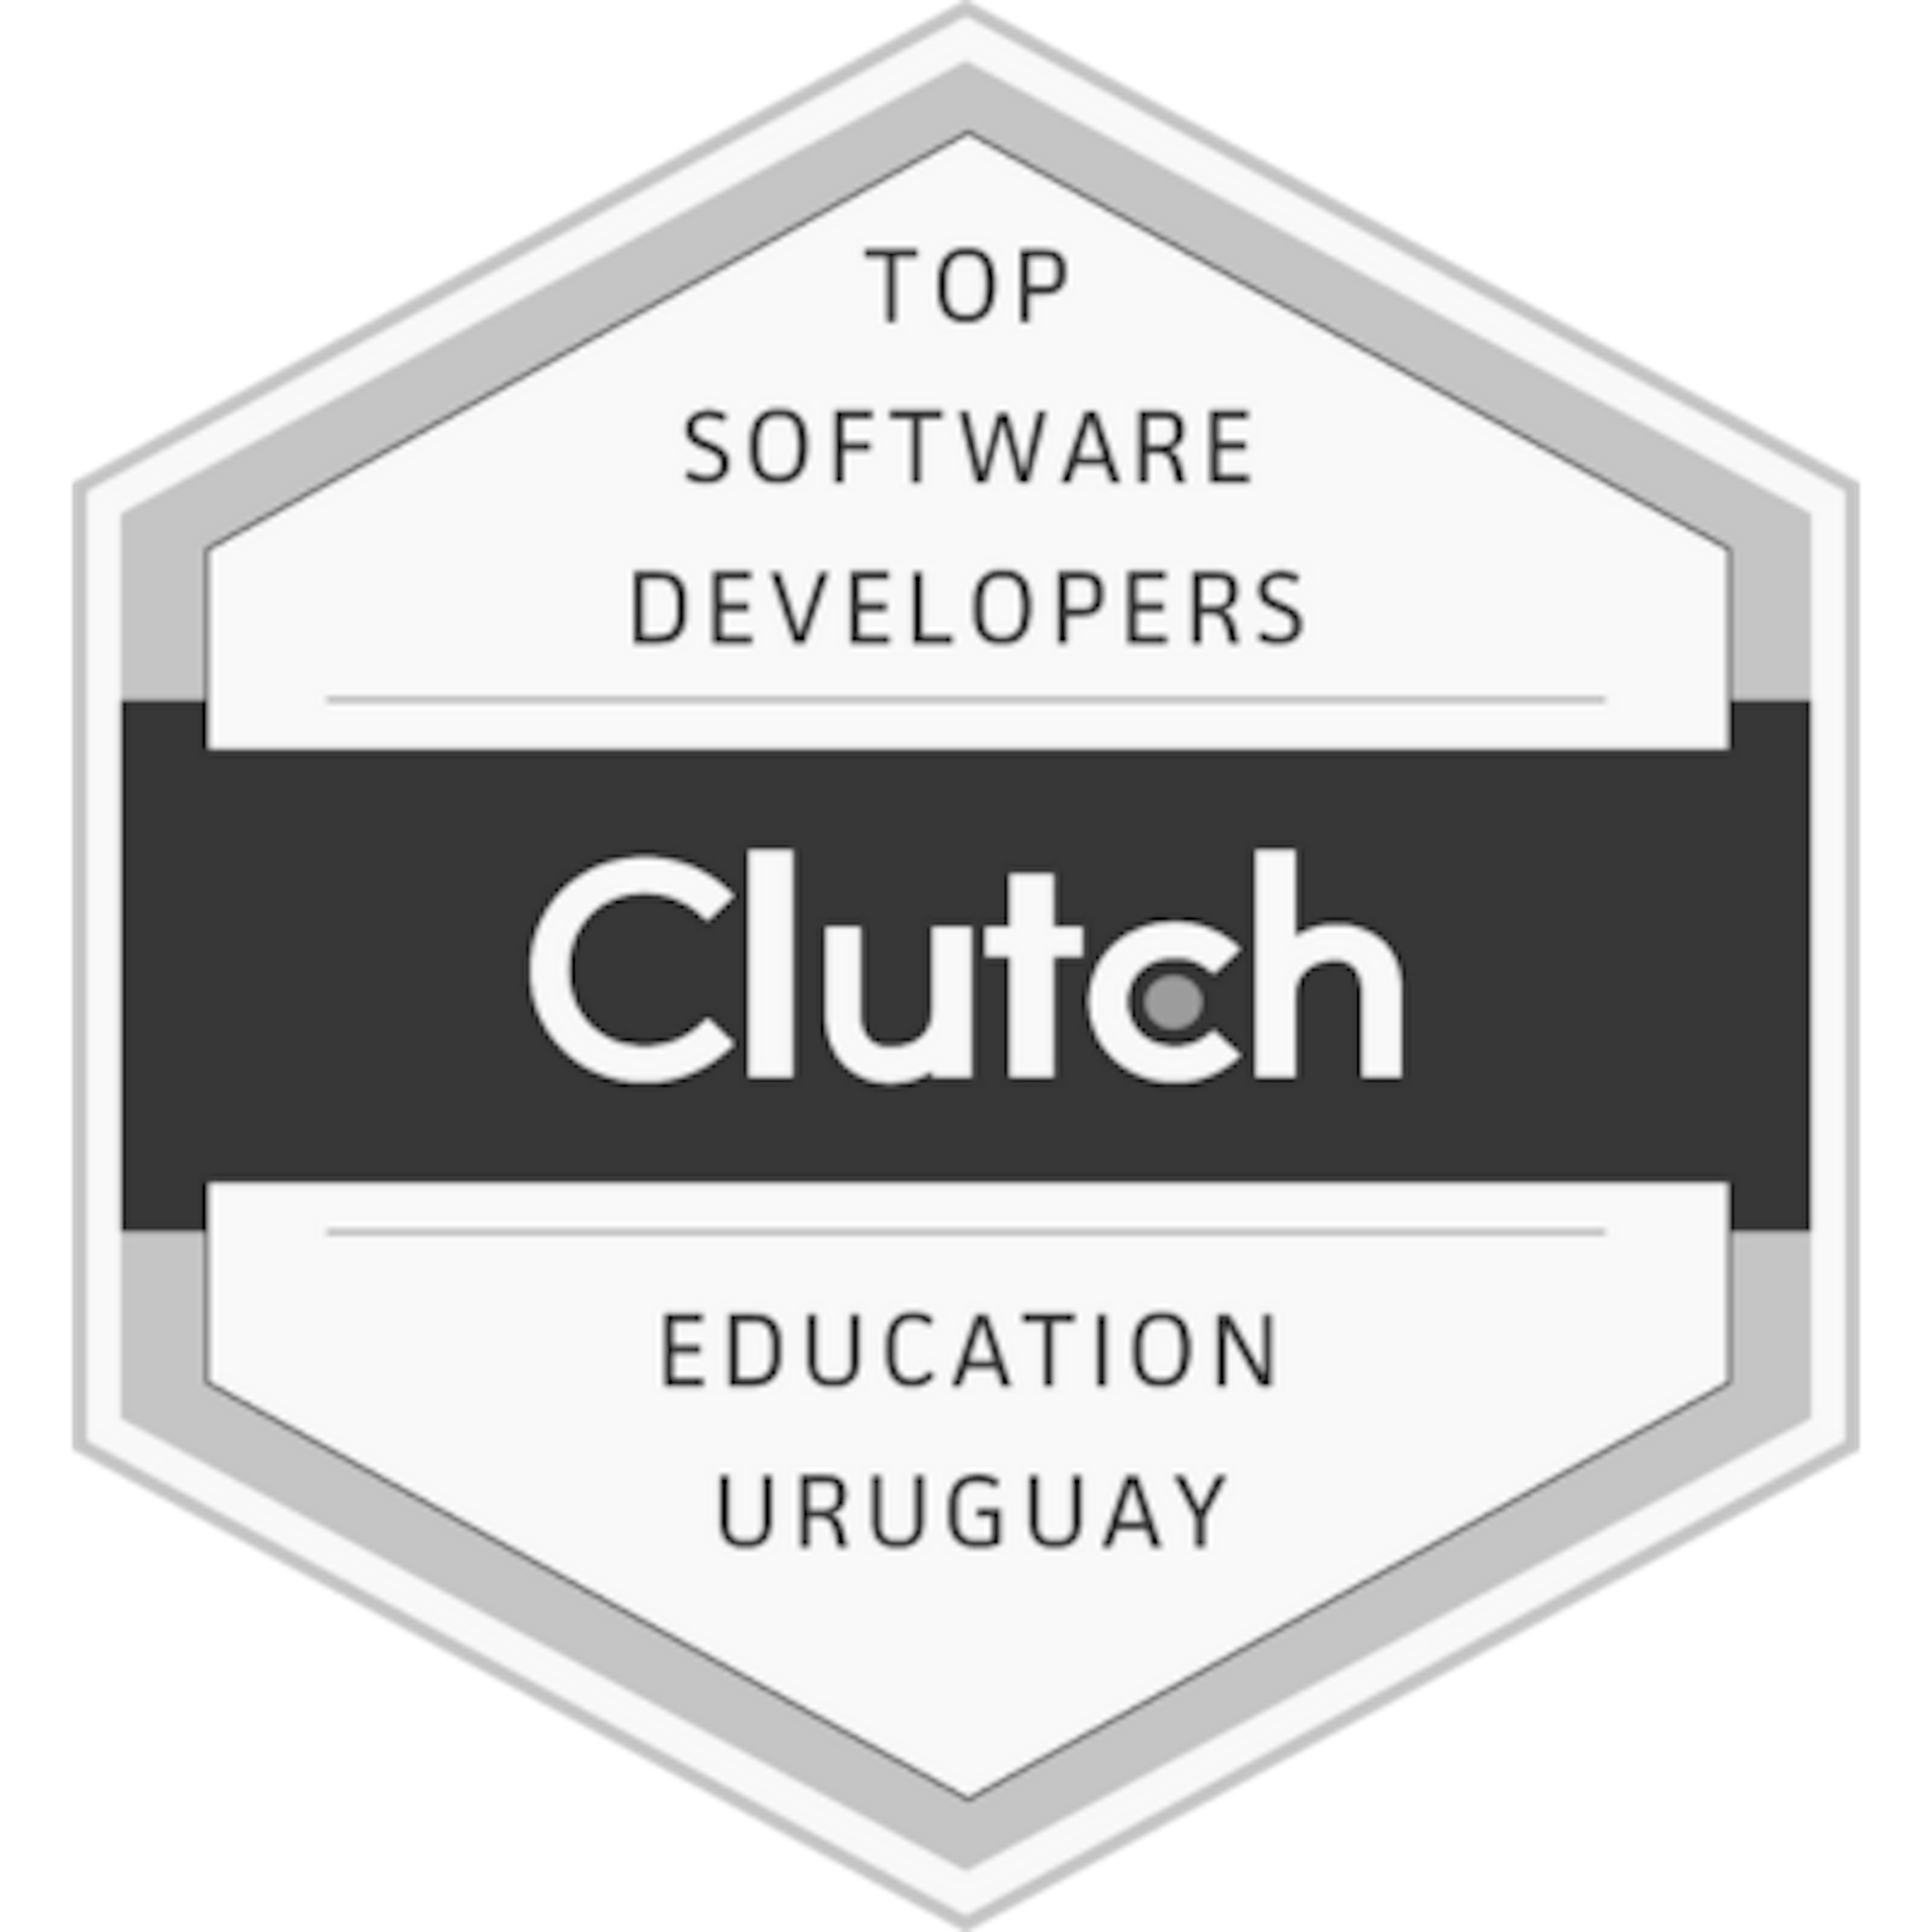 Top Software Developers - Education Uruguay